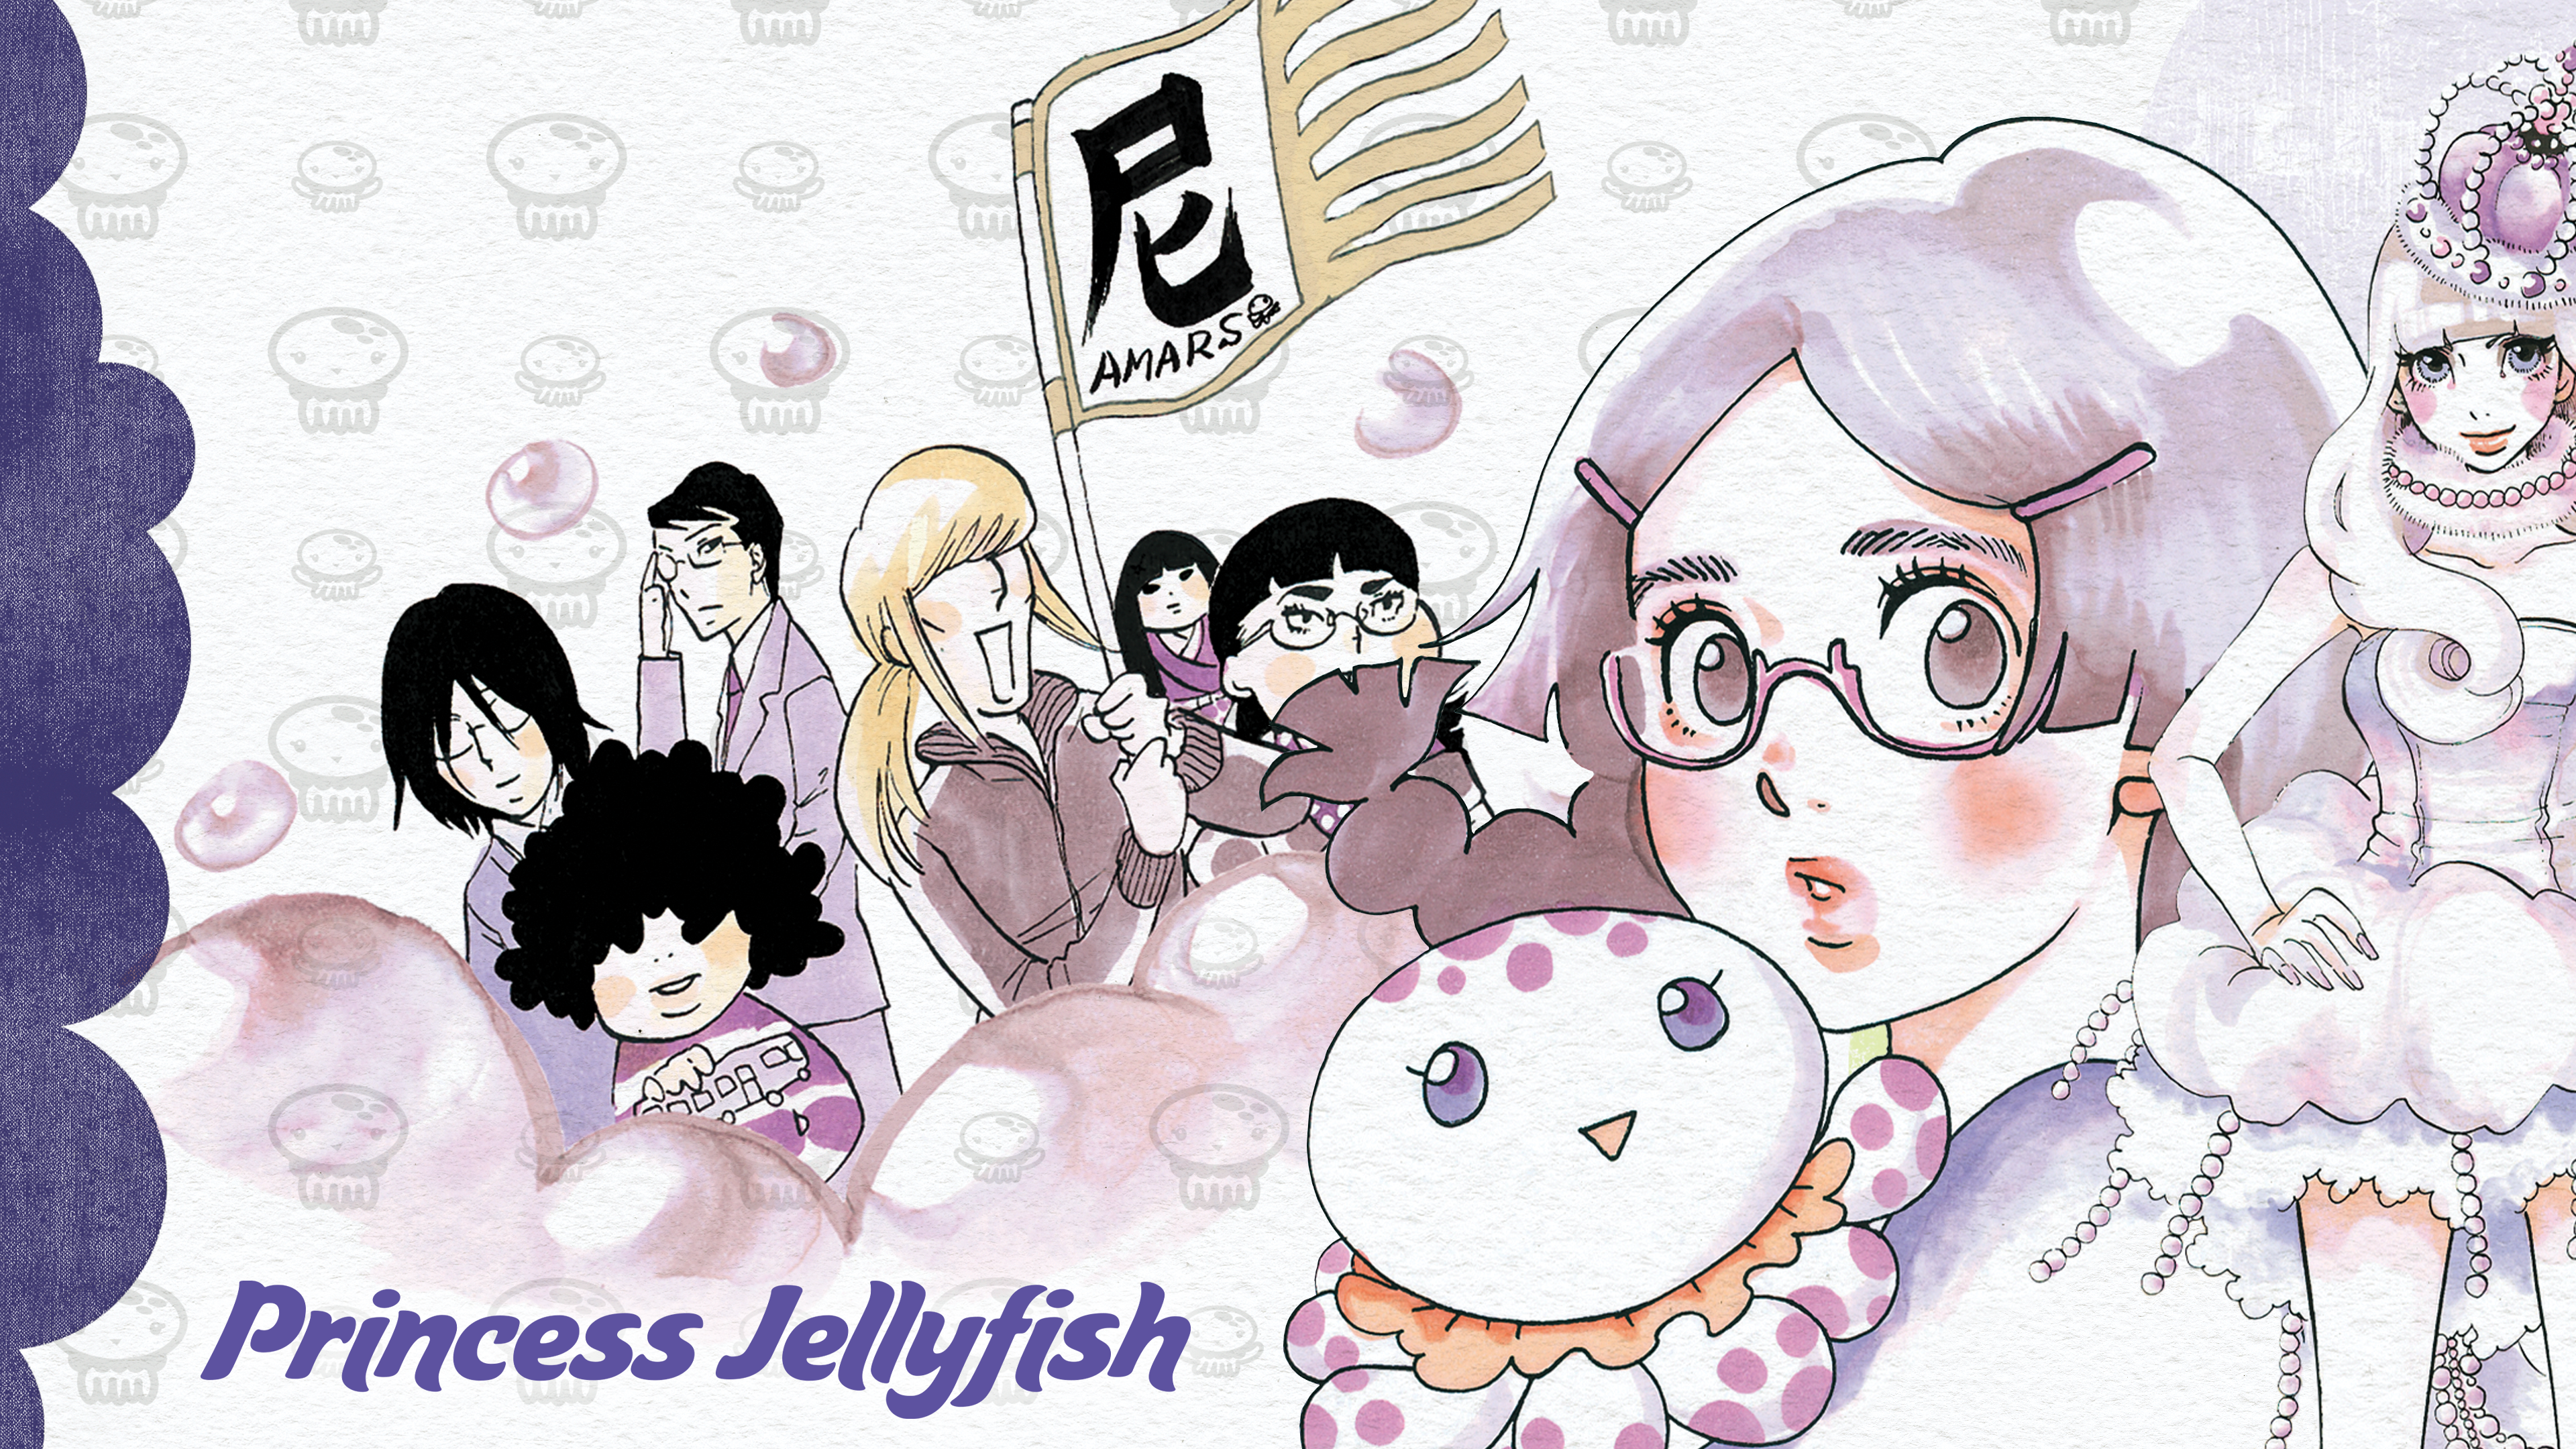 Watch Princess Jellyfish Sub Dub Comedy Slice Of Life Anime Funimation